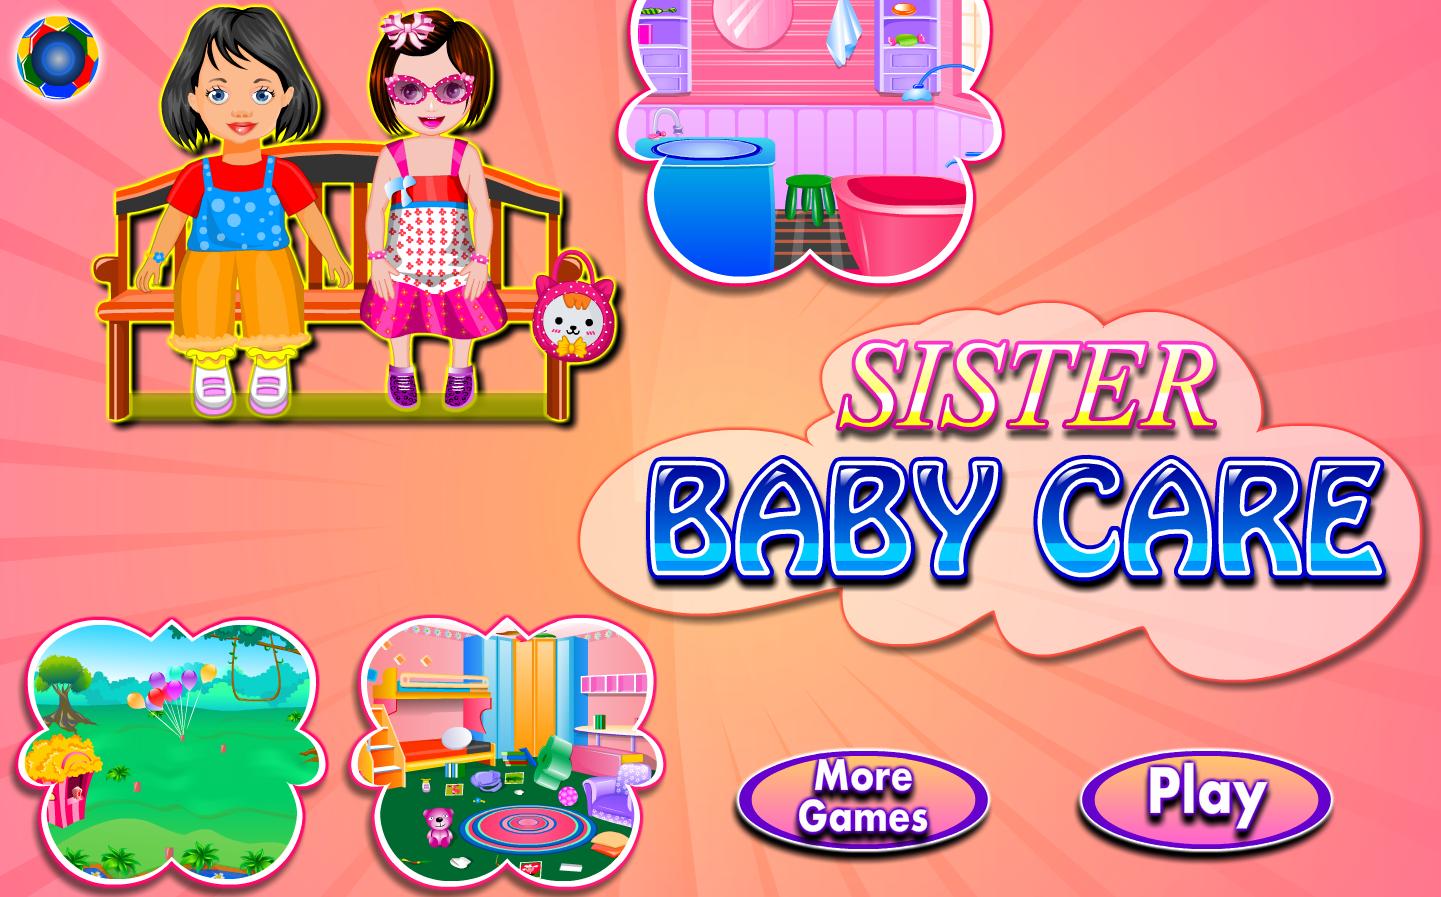 Little sister game. Игры с сестрой. Систер систер систер игра. Baby sister игра. Baby Care game Android.